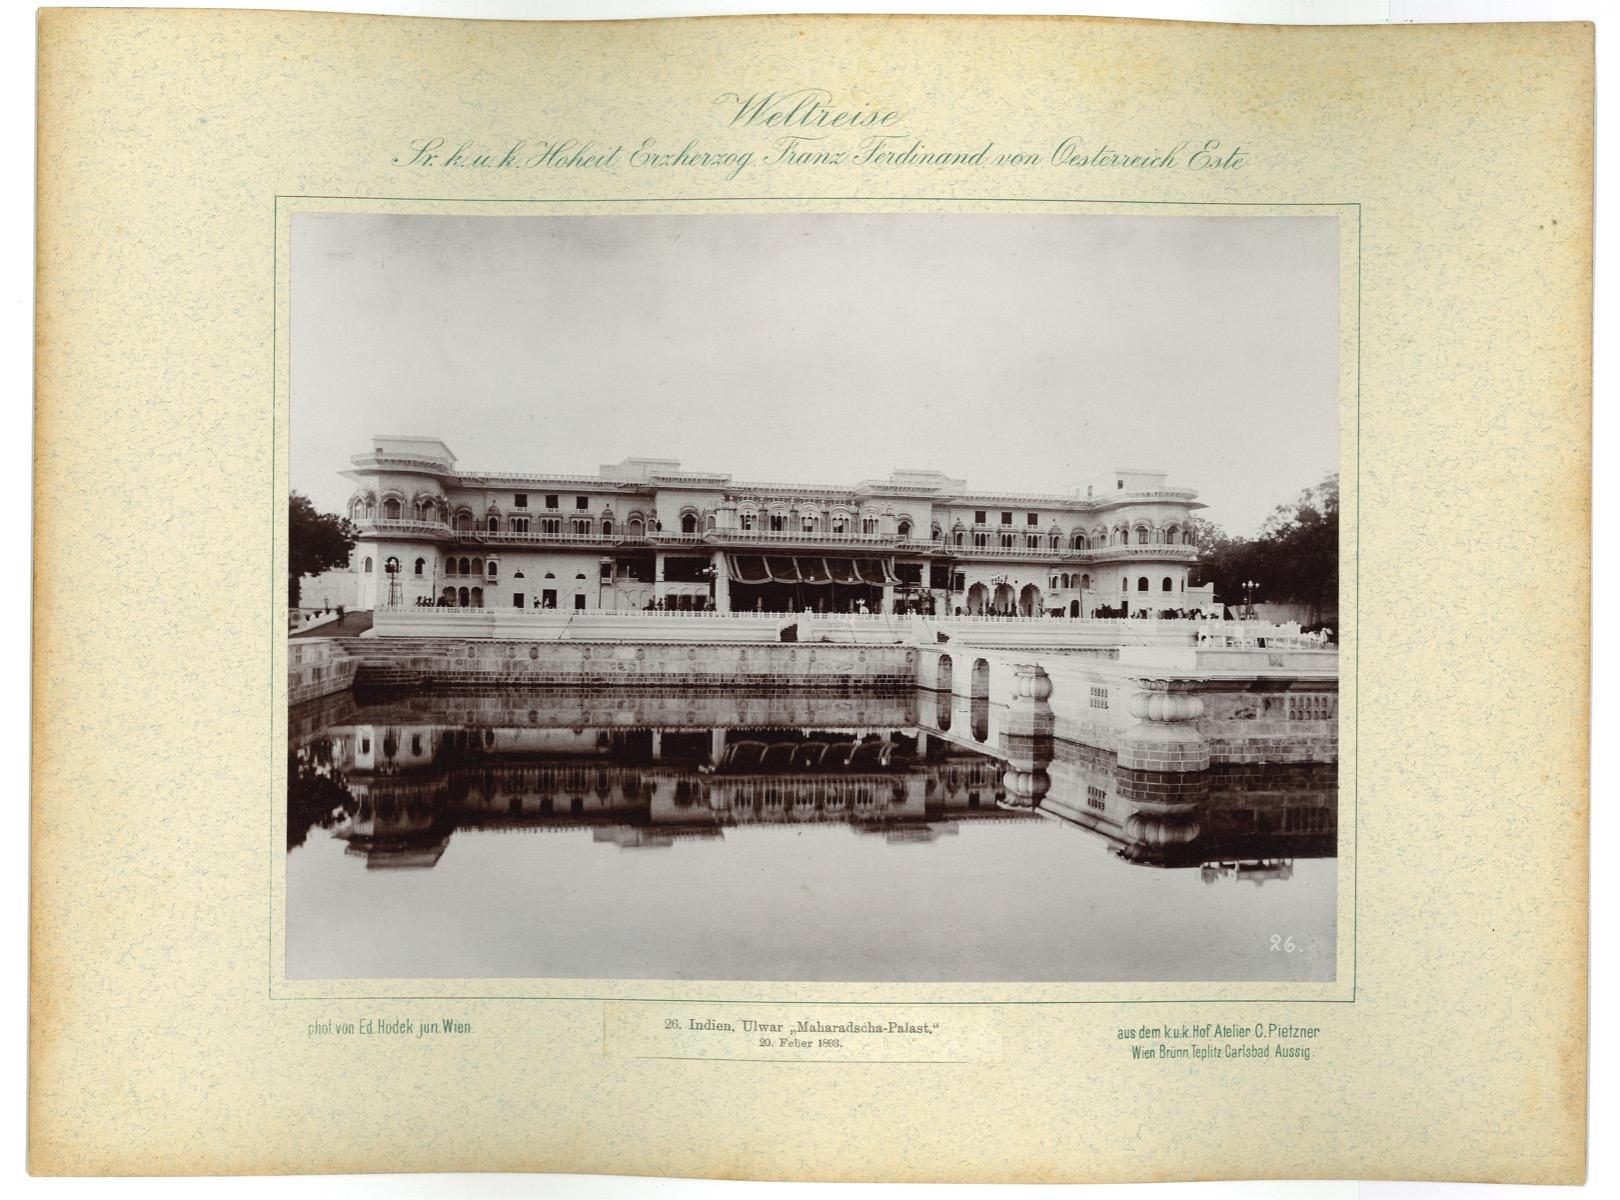 Unknown Landscape Photograph - India. Ulwar - Maharadscha - Palast - Original Vintage Photo - 1893